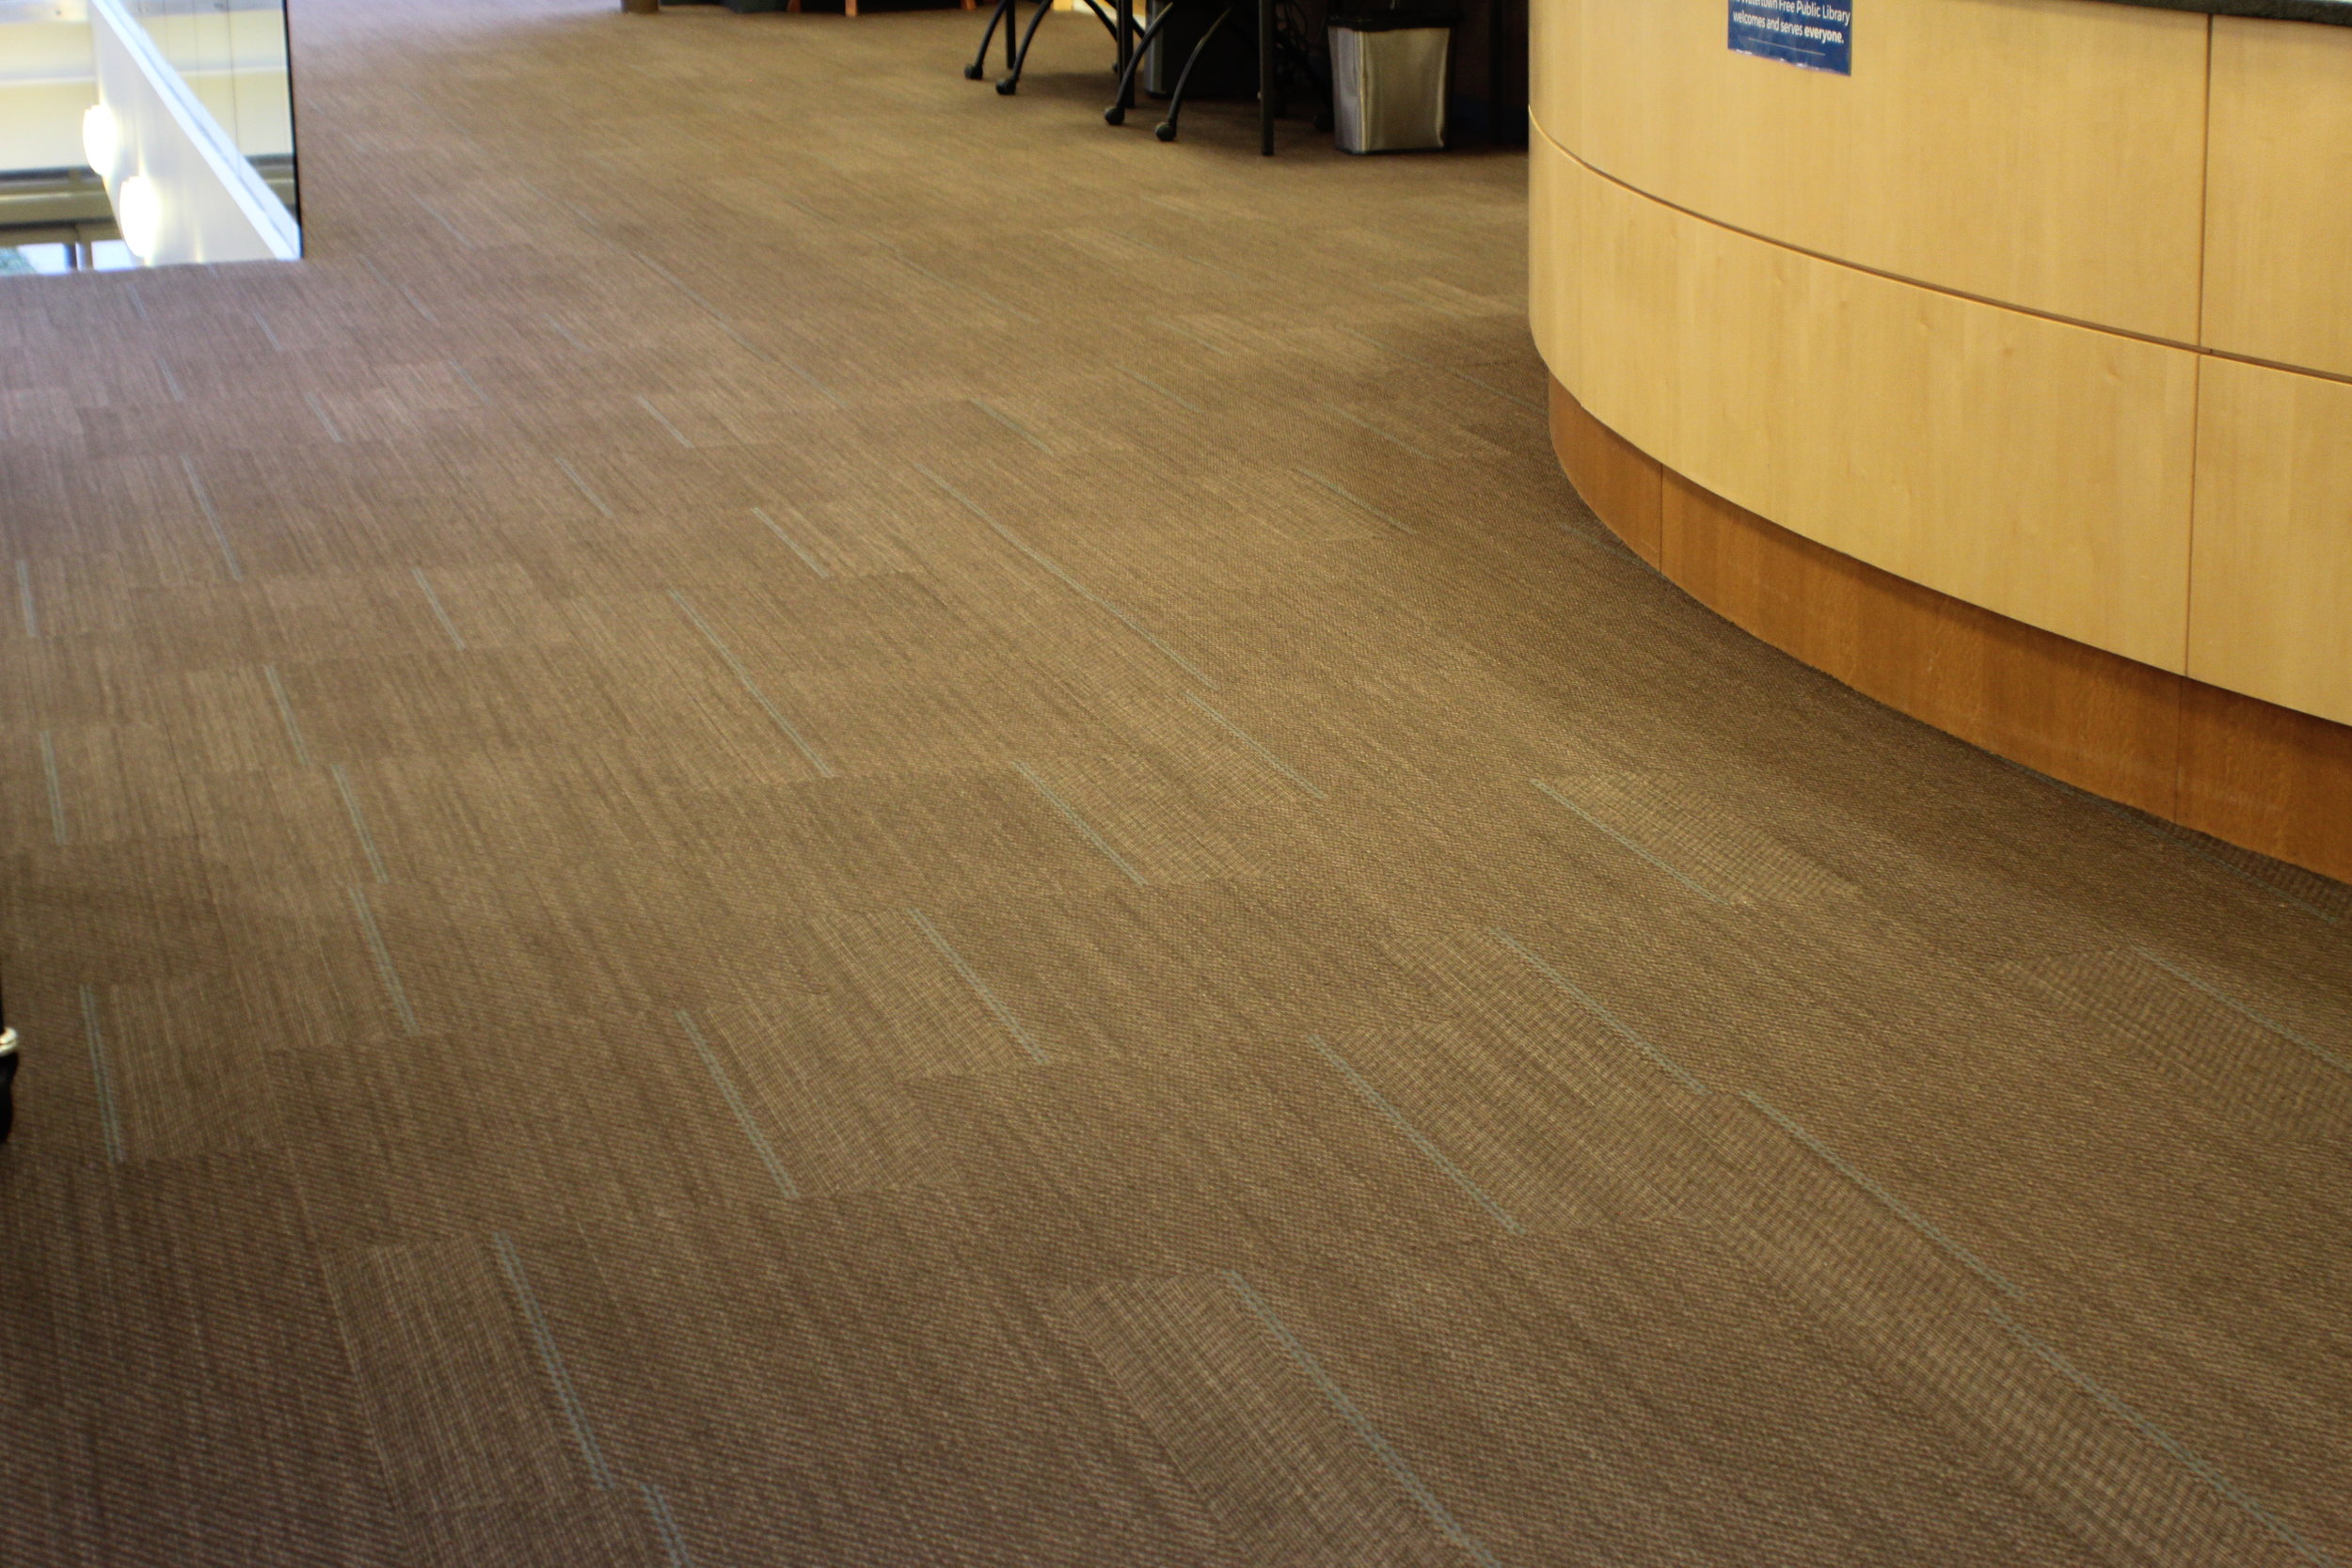 Watertown Public Library x Atkinson Carpet & Flooring